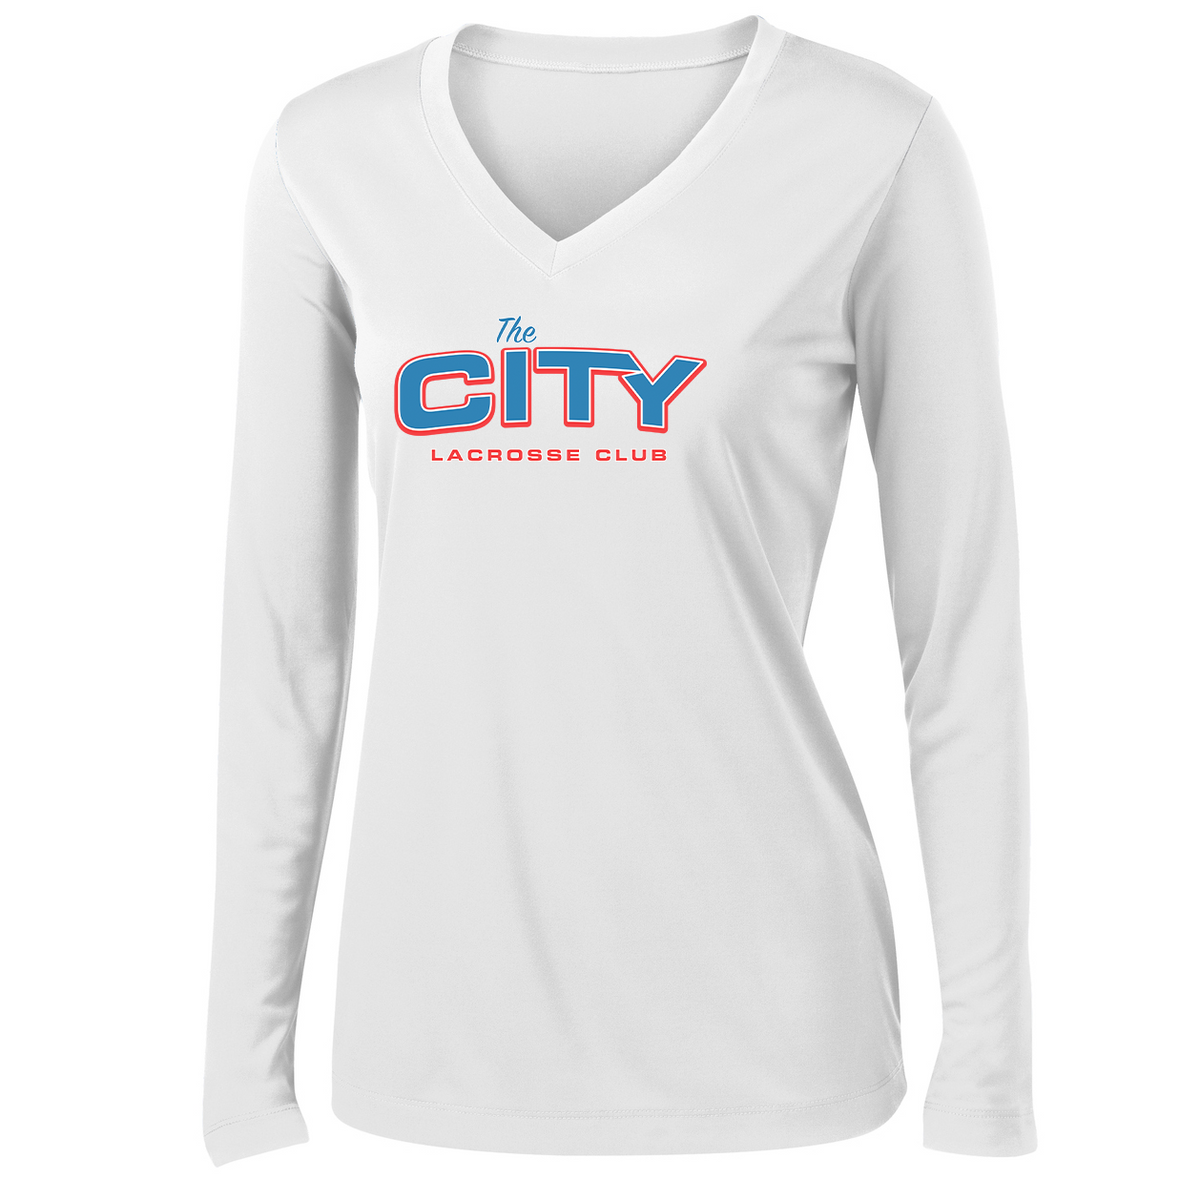 OKC Lacrosse Club Women's Long Sleeve Performance Shirt